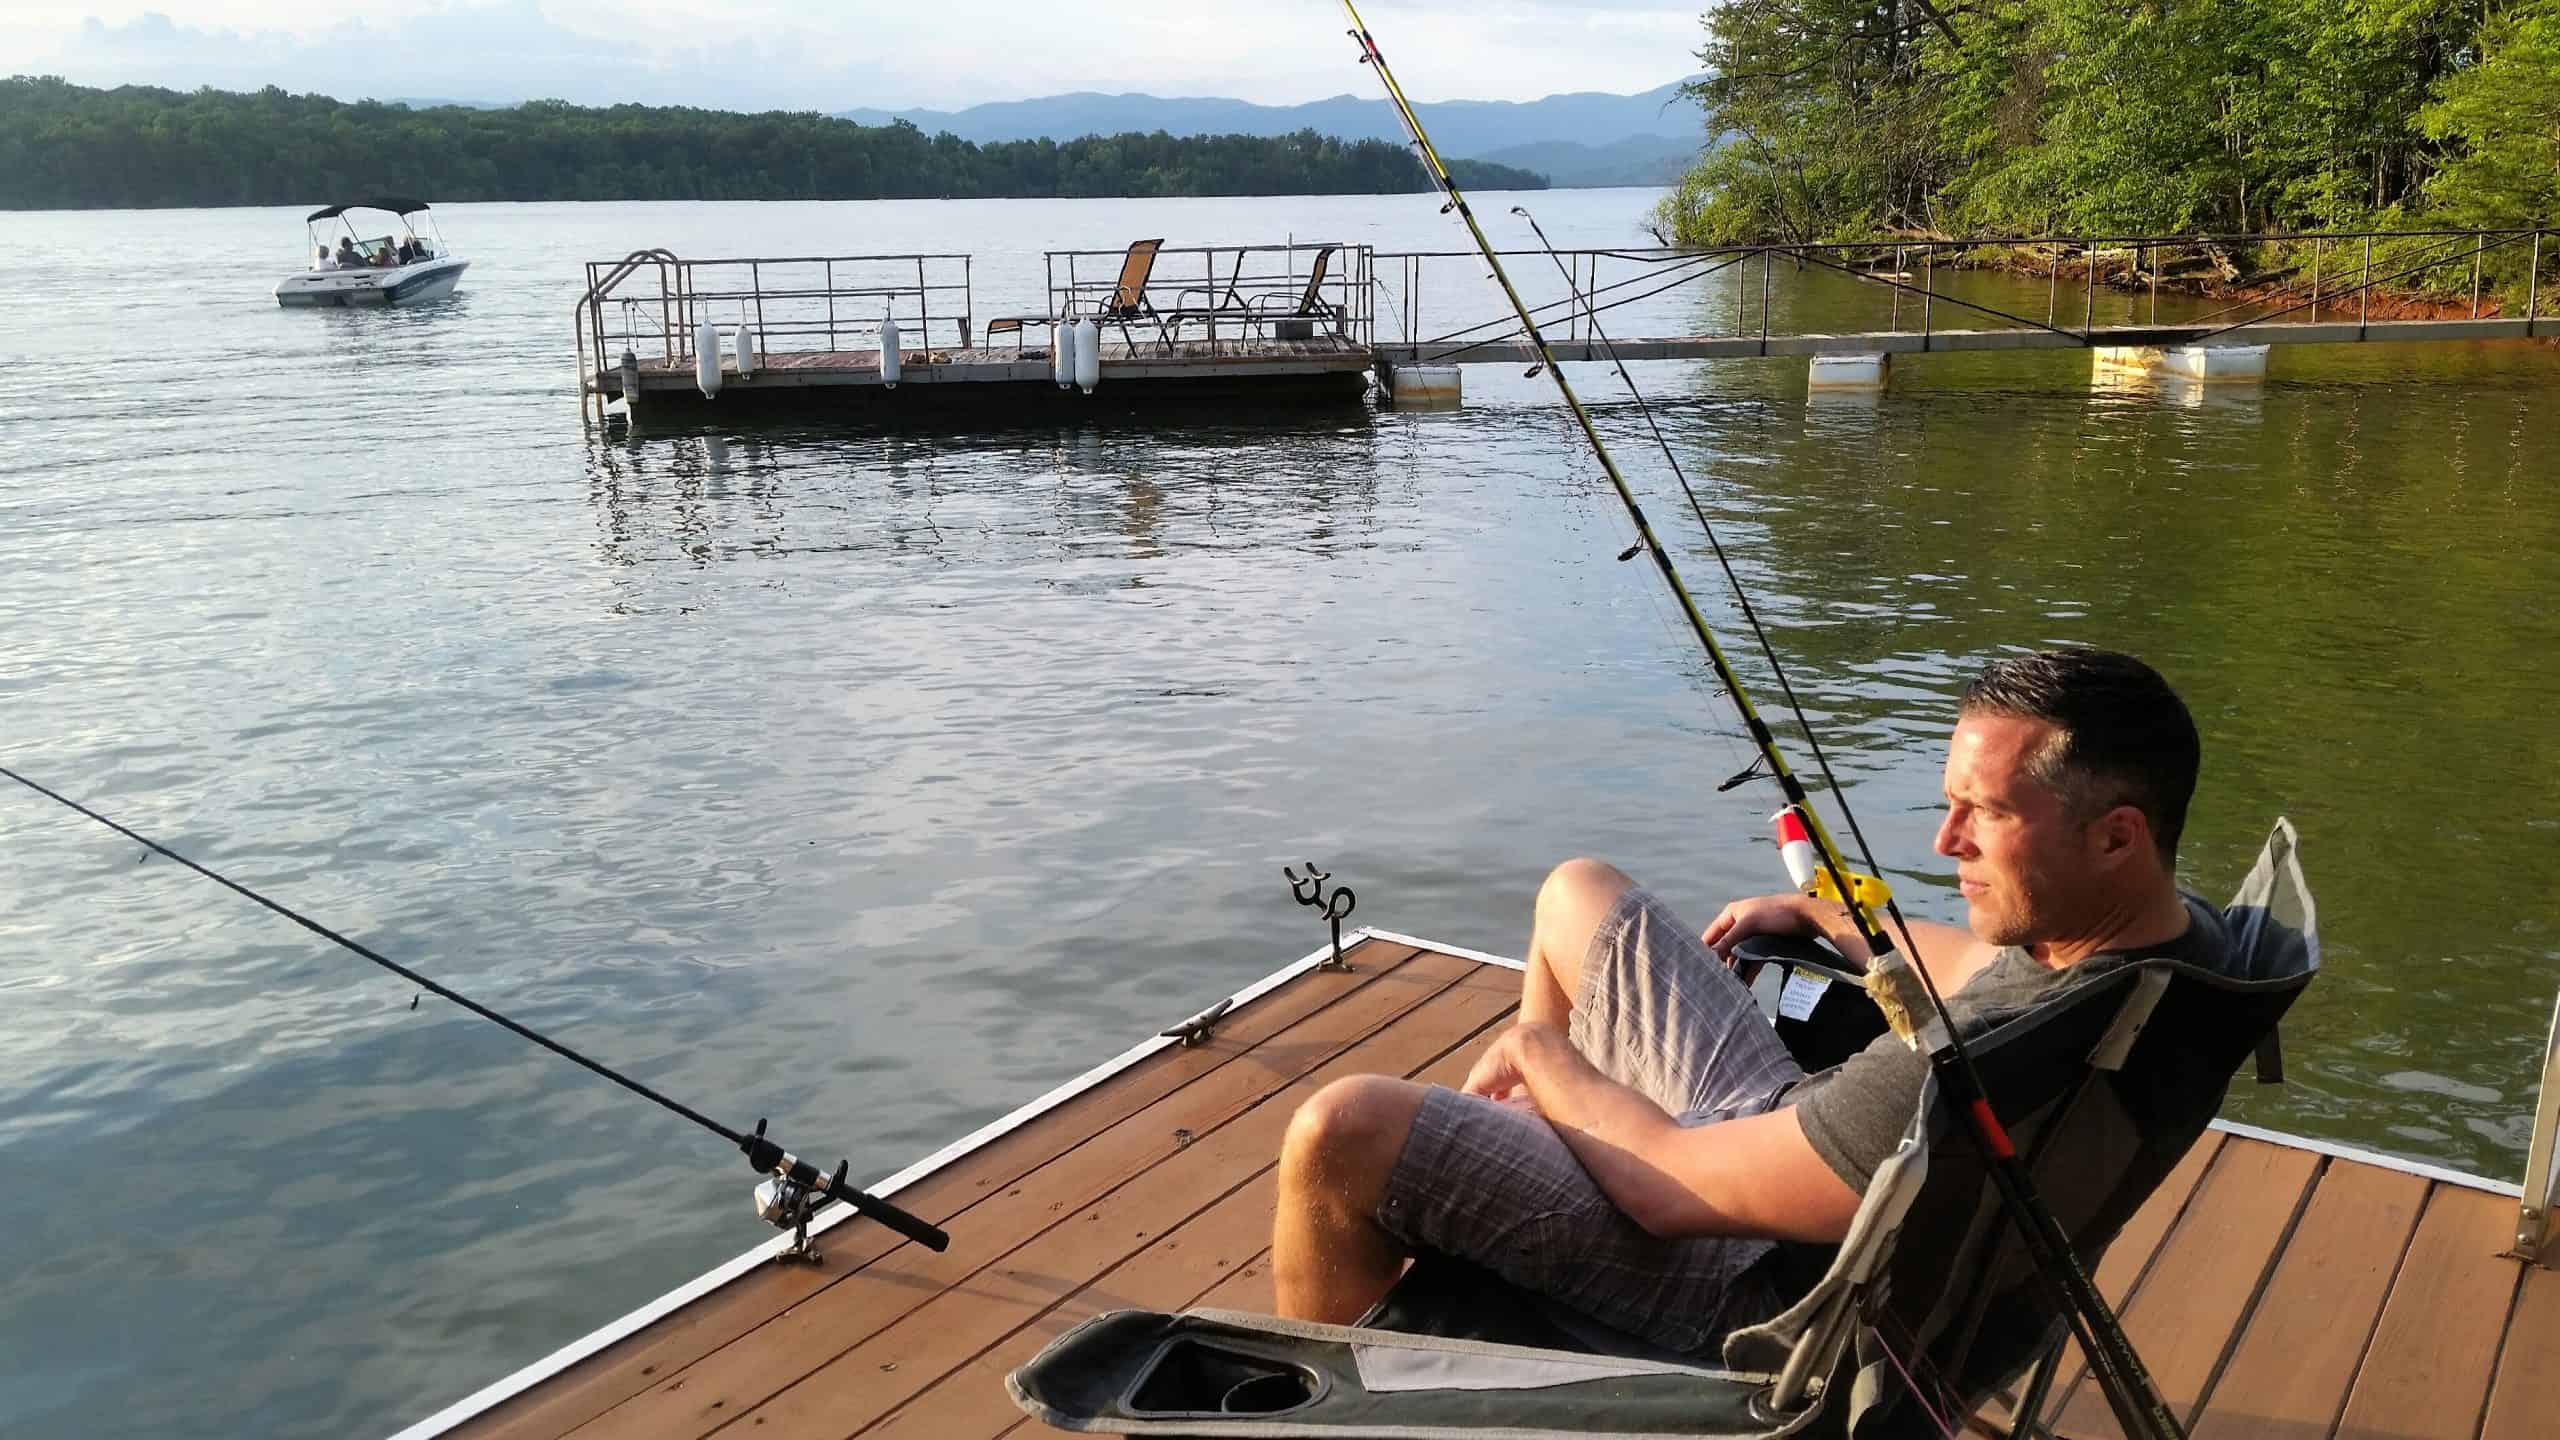 Fishing on the lake fisherman baited his hook